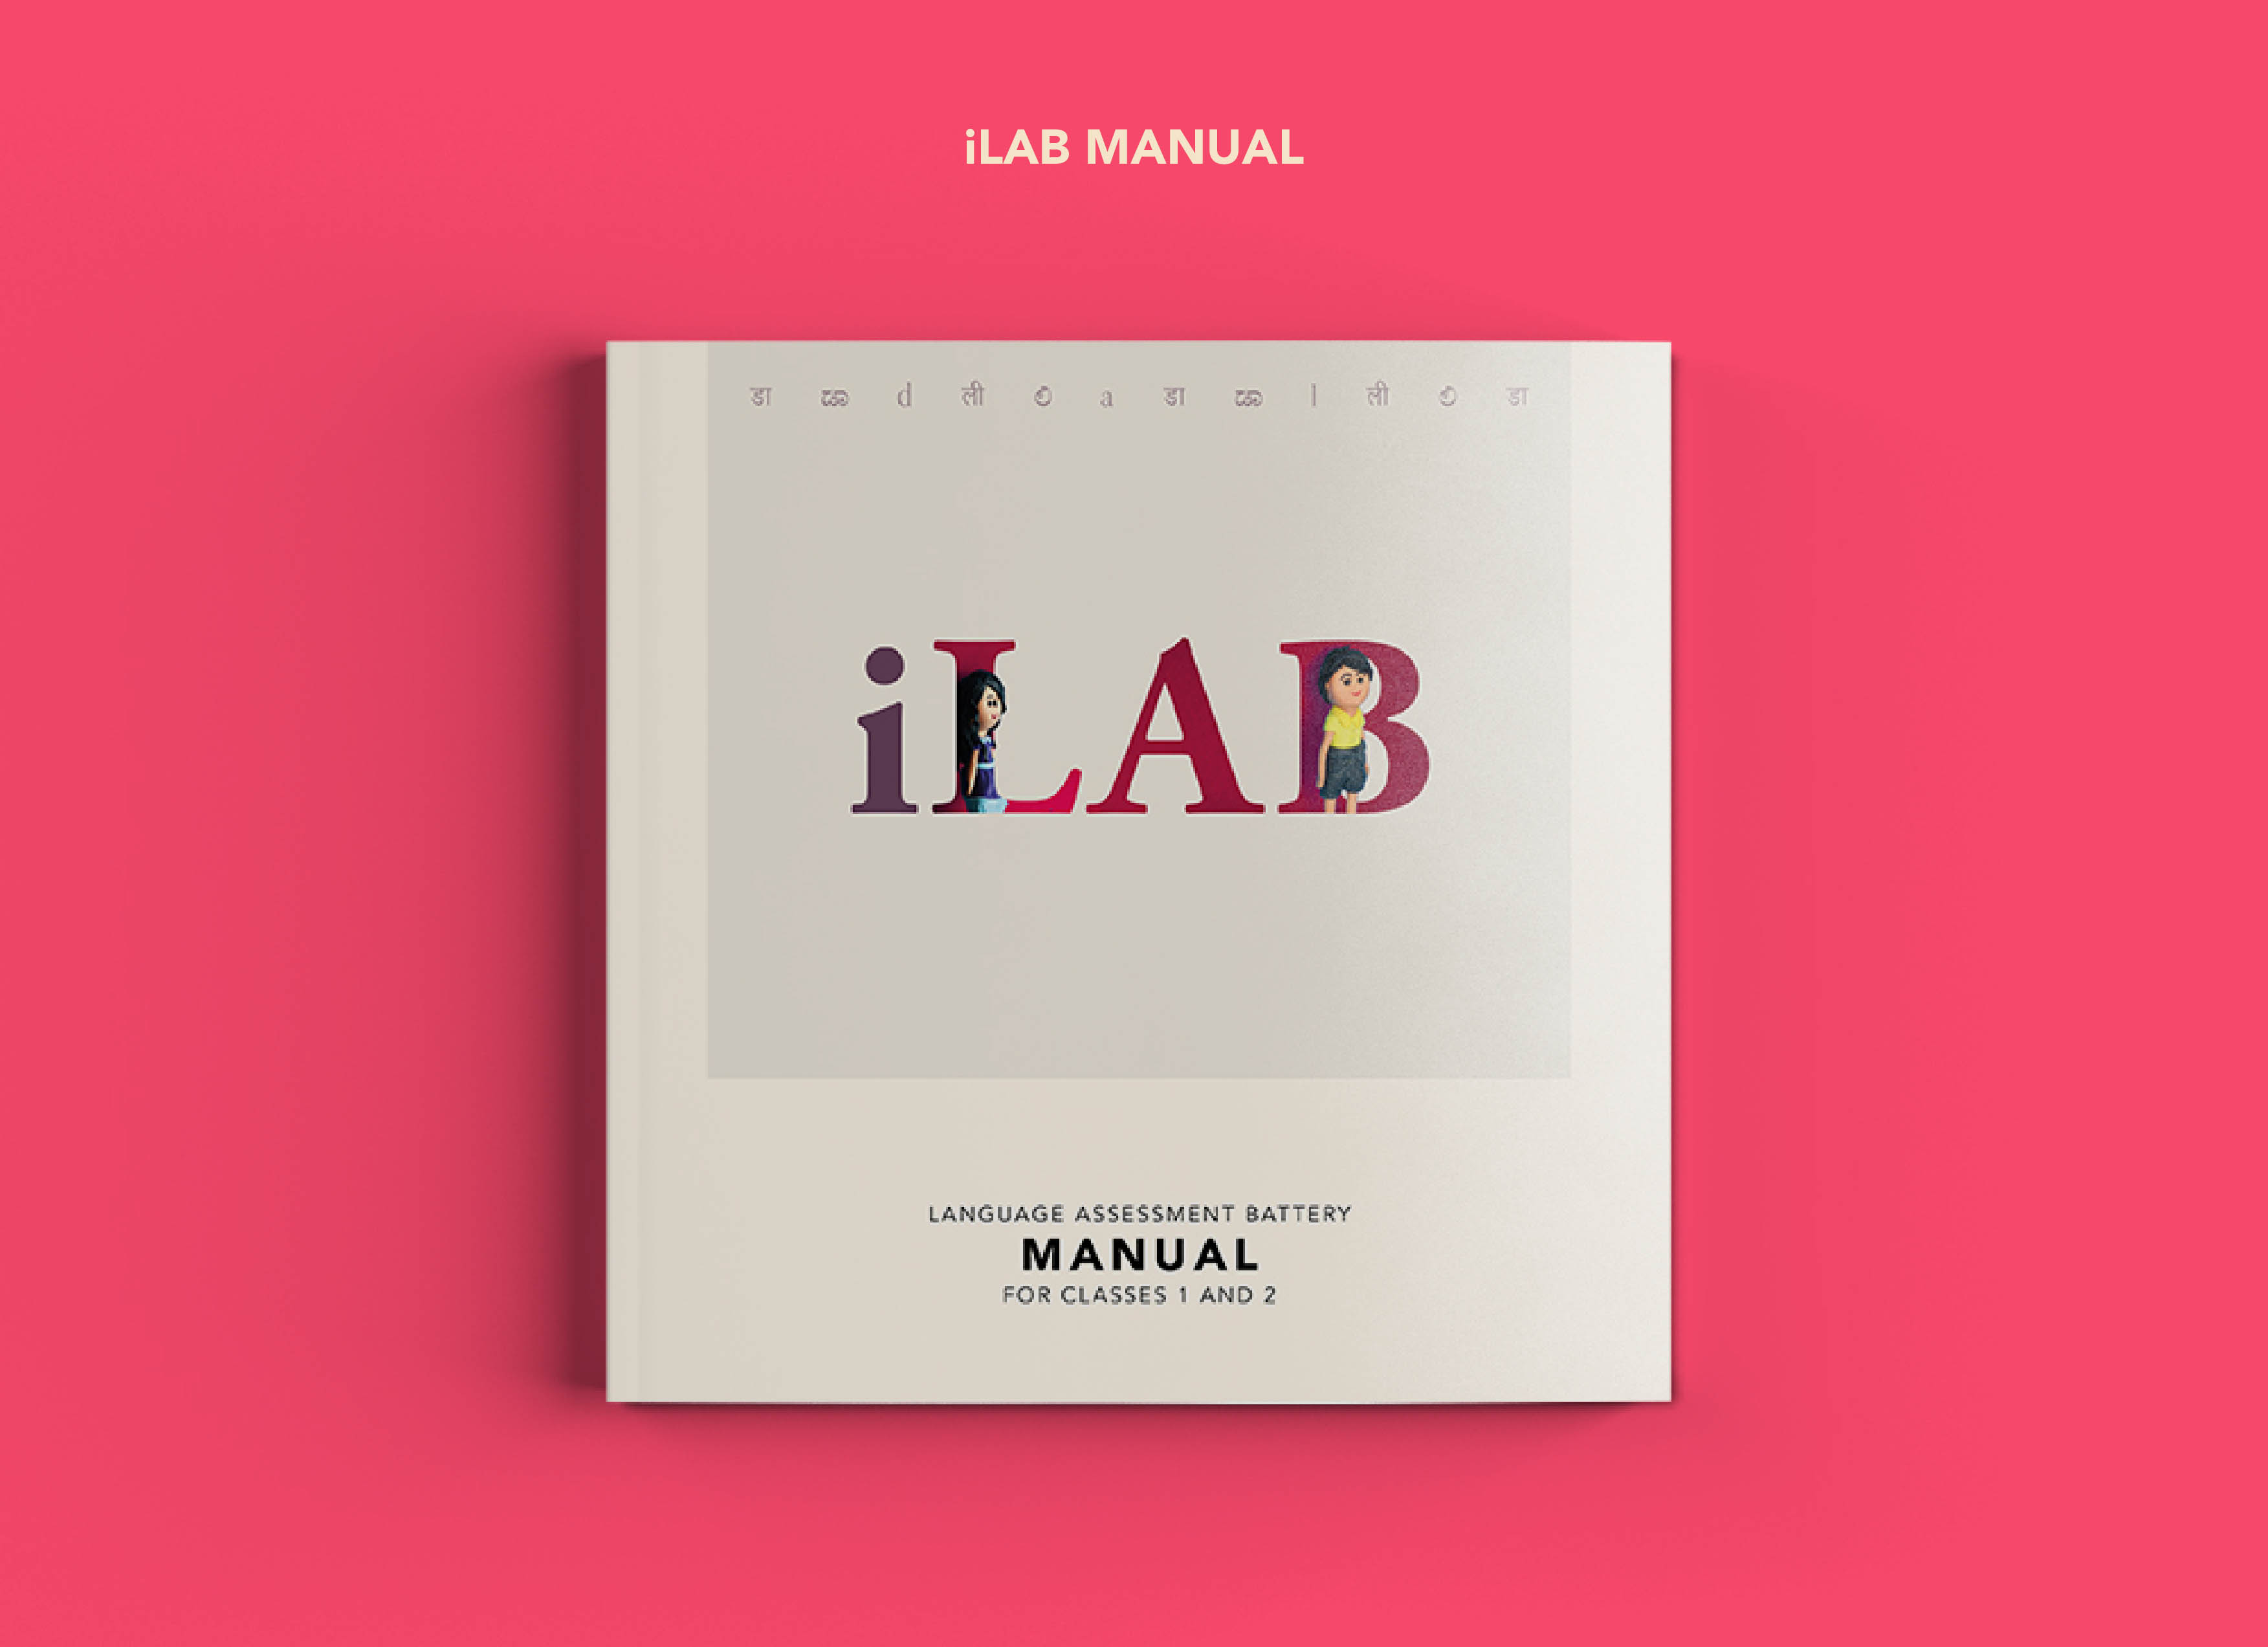 iLAB Manual